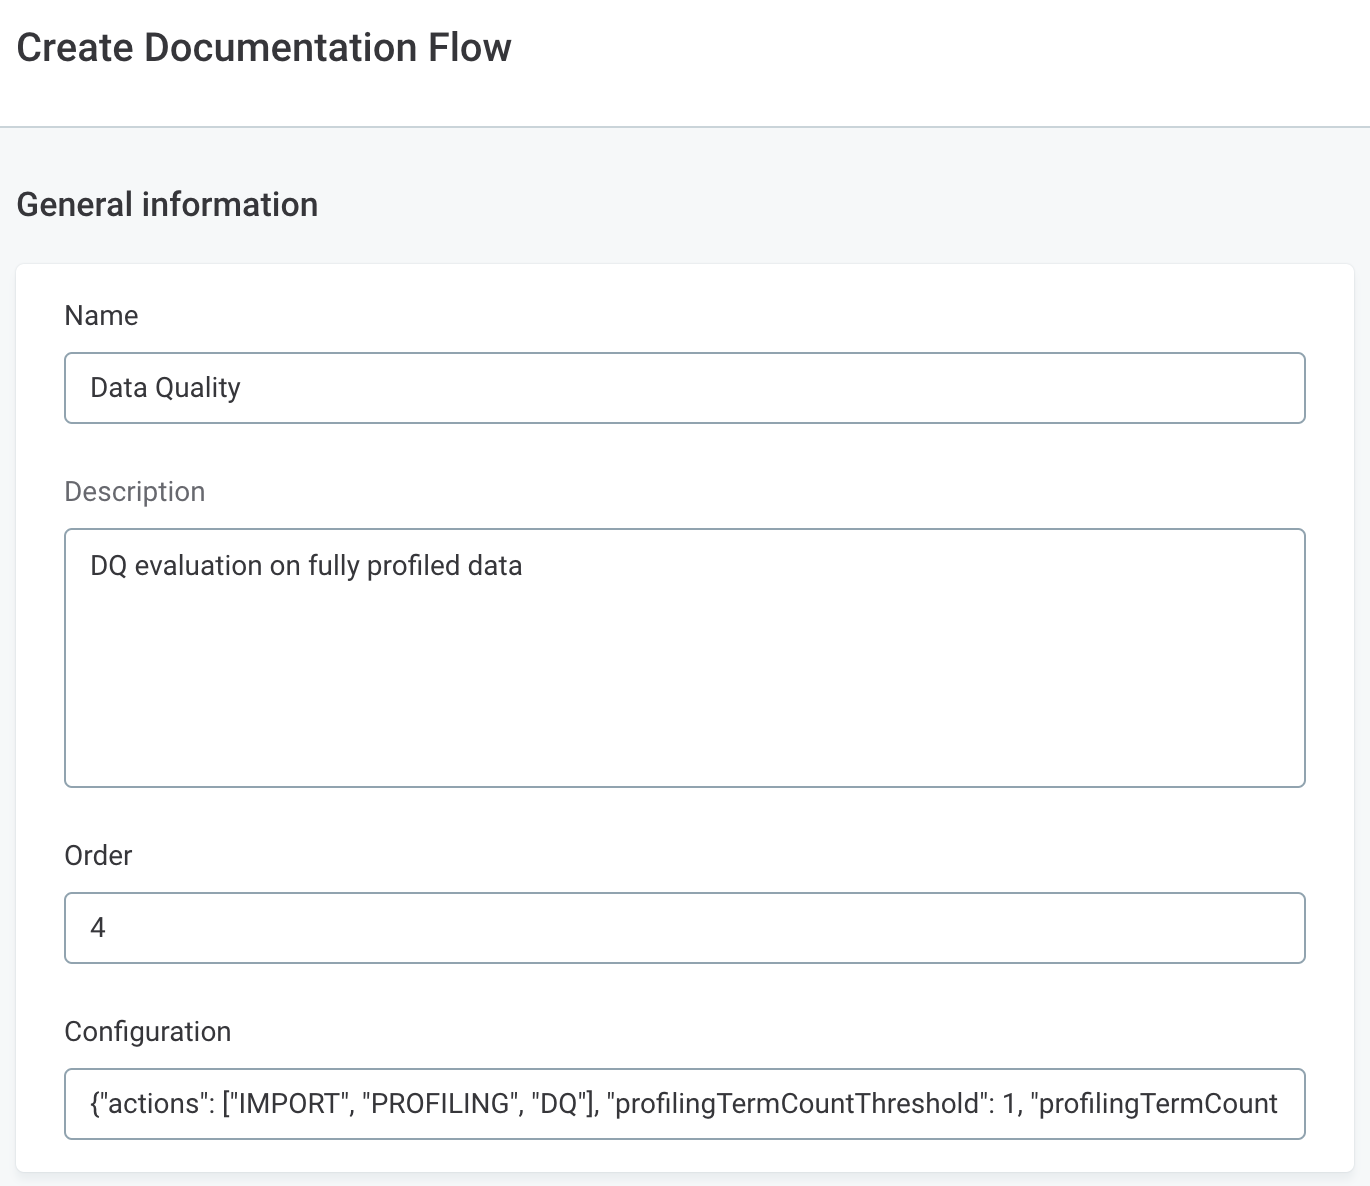 Create new documentation flow